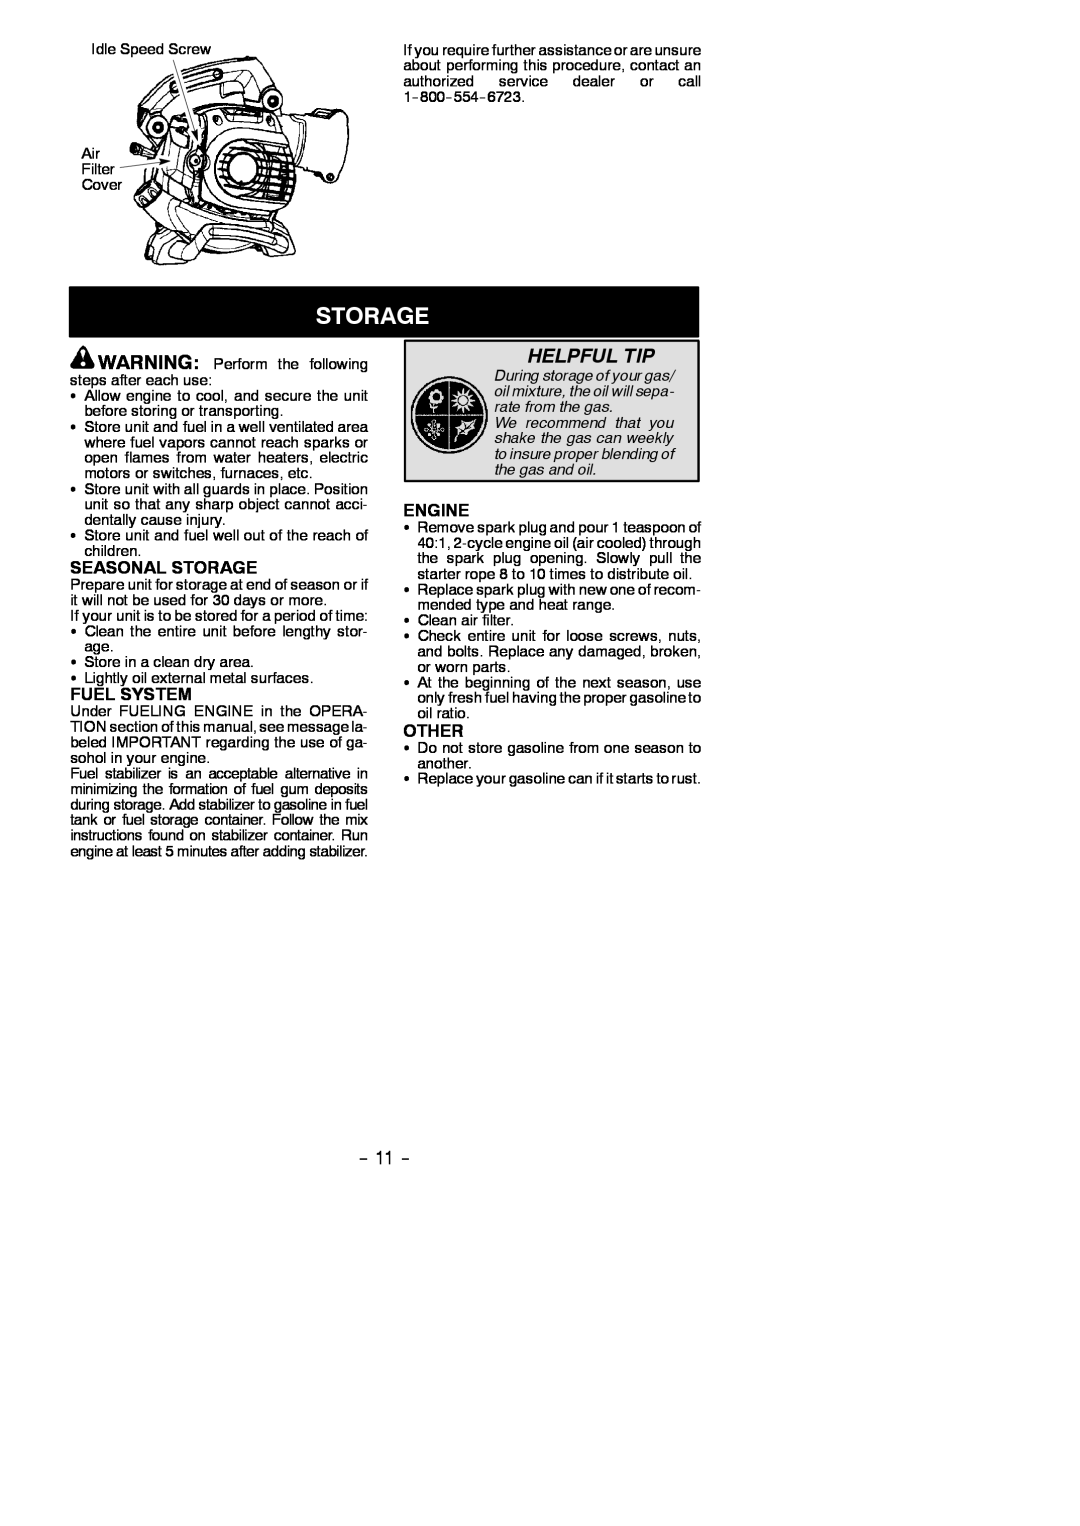 Poulan 545177387 instruction manual Helpful Tip, Seasonal Storage, Fuel System, Engine, Other 